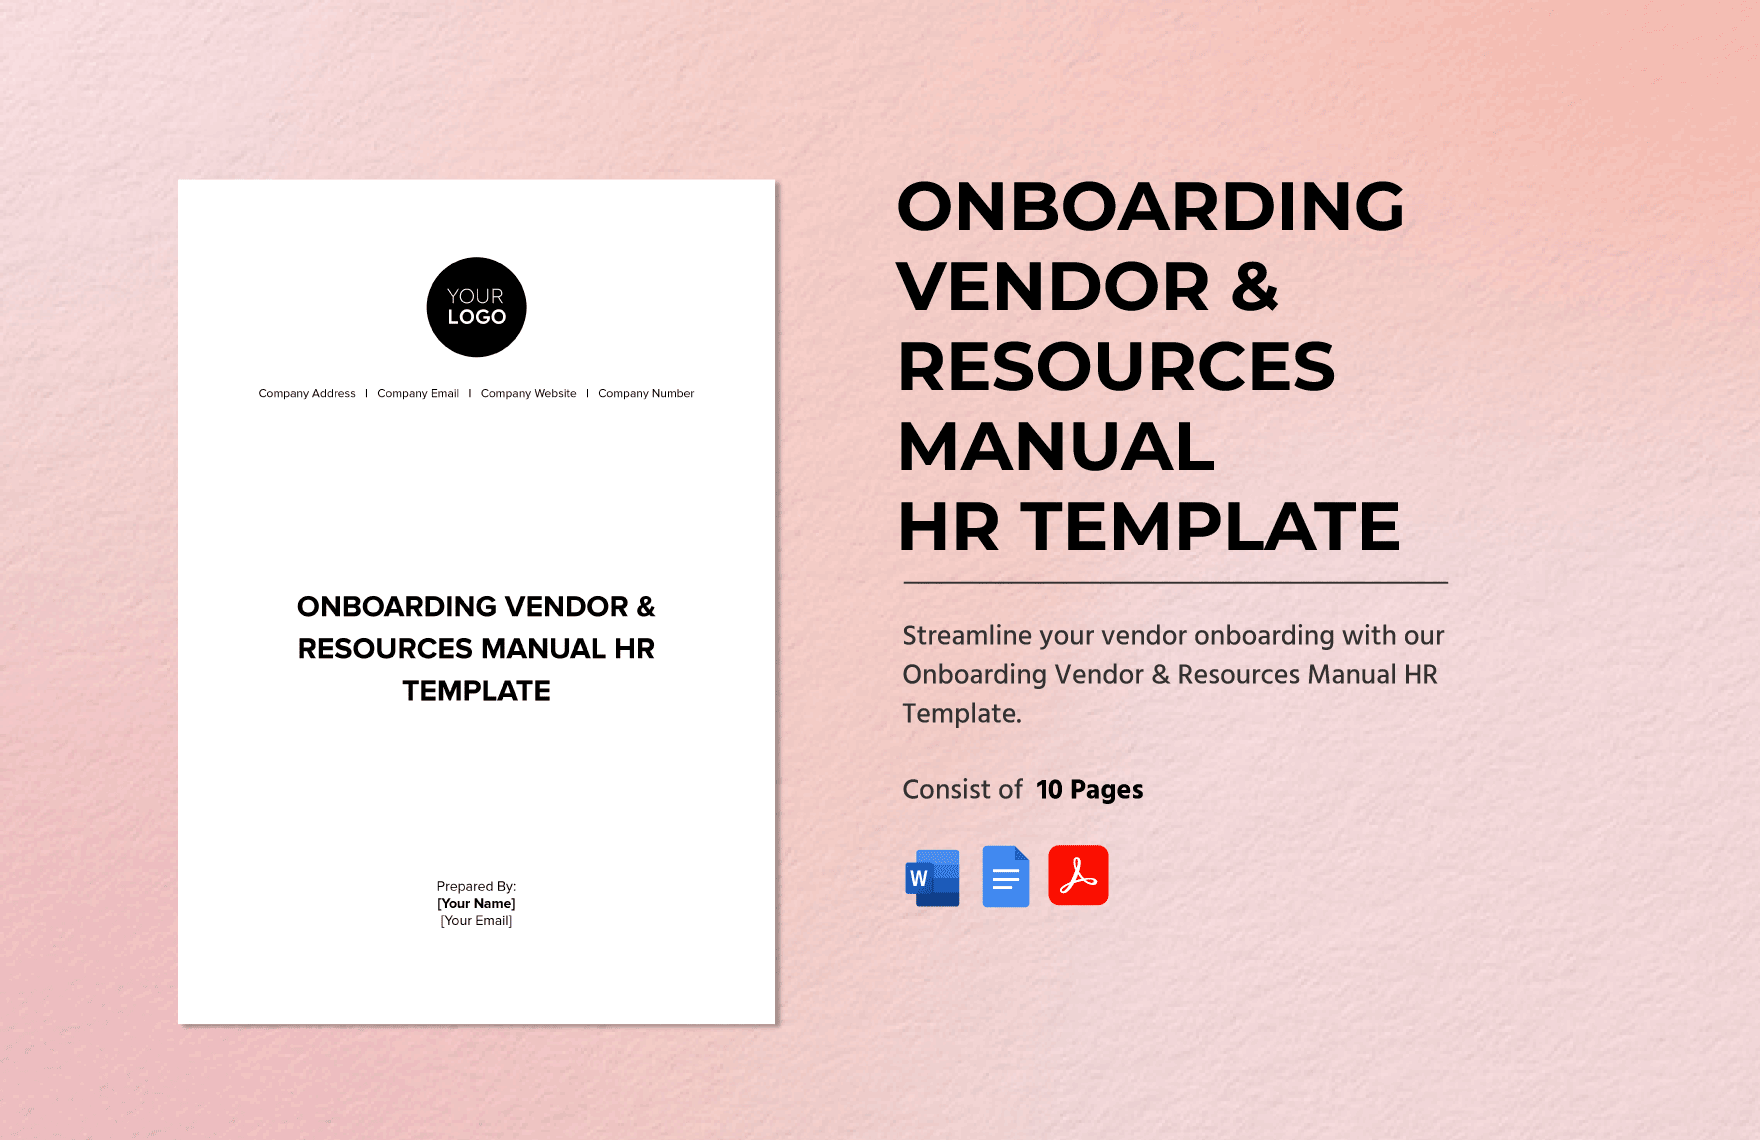 Onboarding Vendor & Resources Manual HR Template